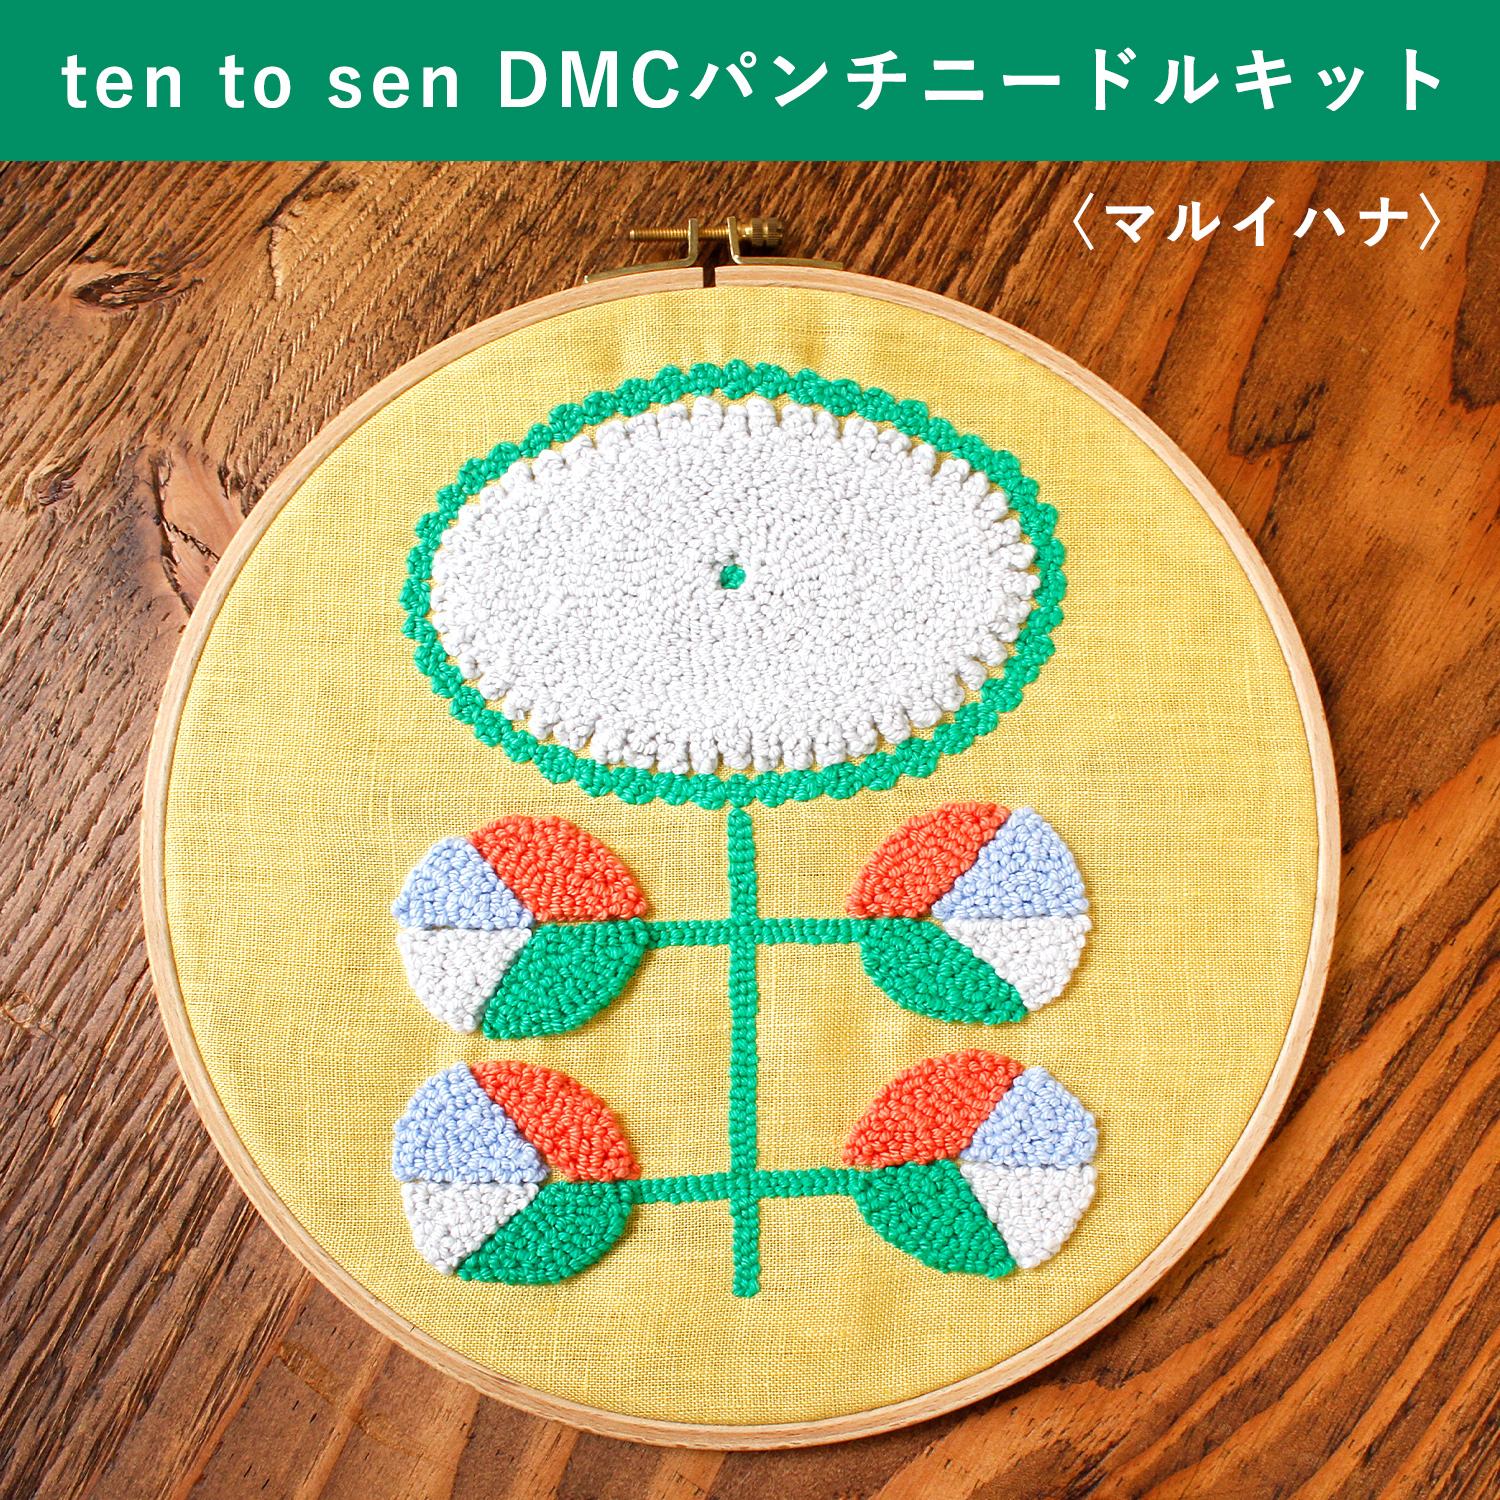 DMC-JPT78　ten to sen DMC Punch Needle Kit　Round Flower （set）